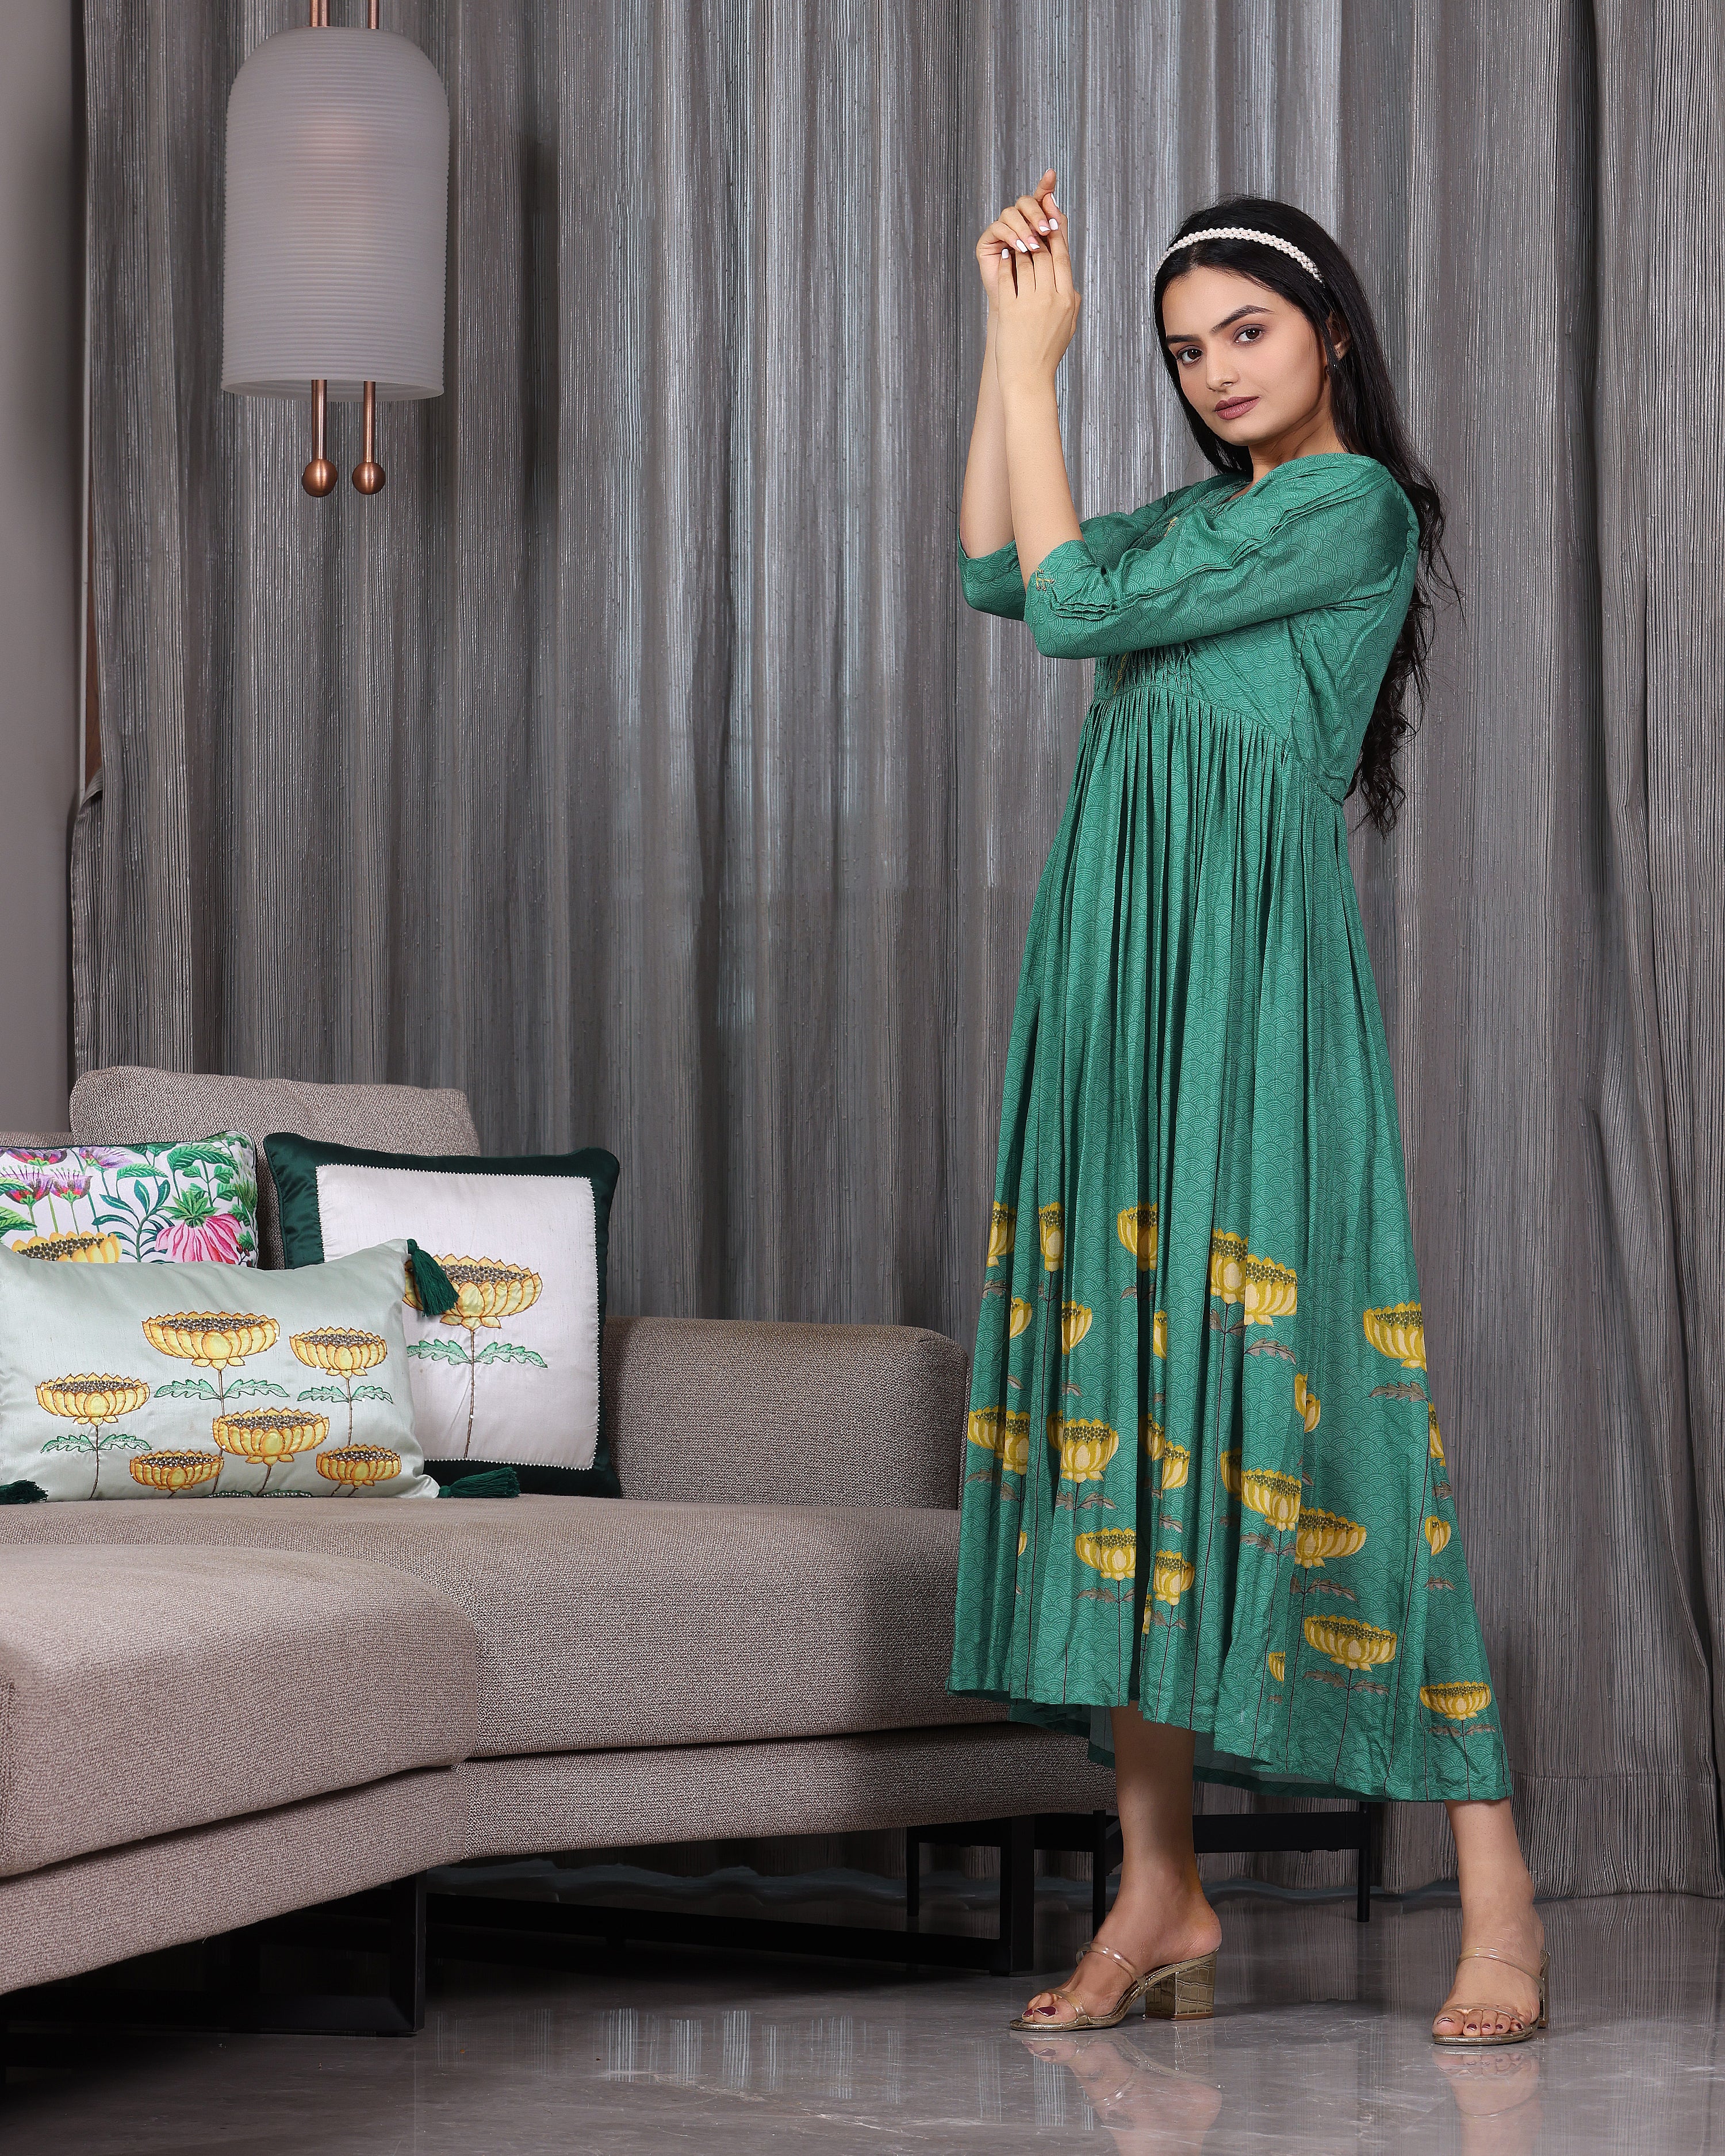 Padma - Jade Green Empire Waist Dress